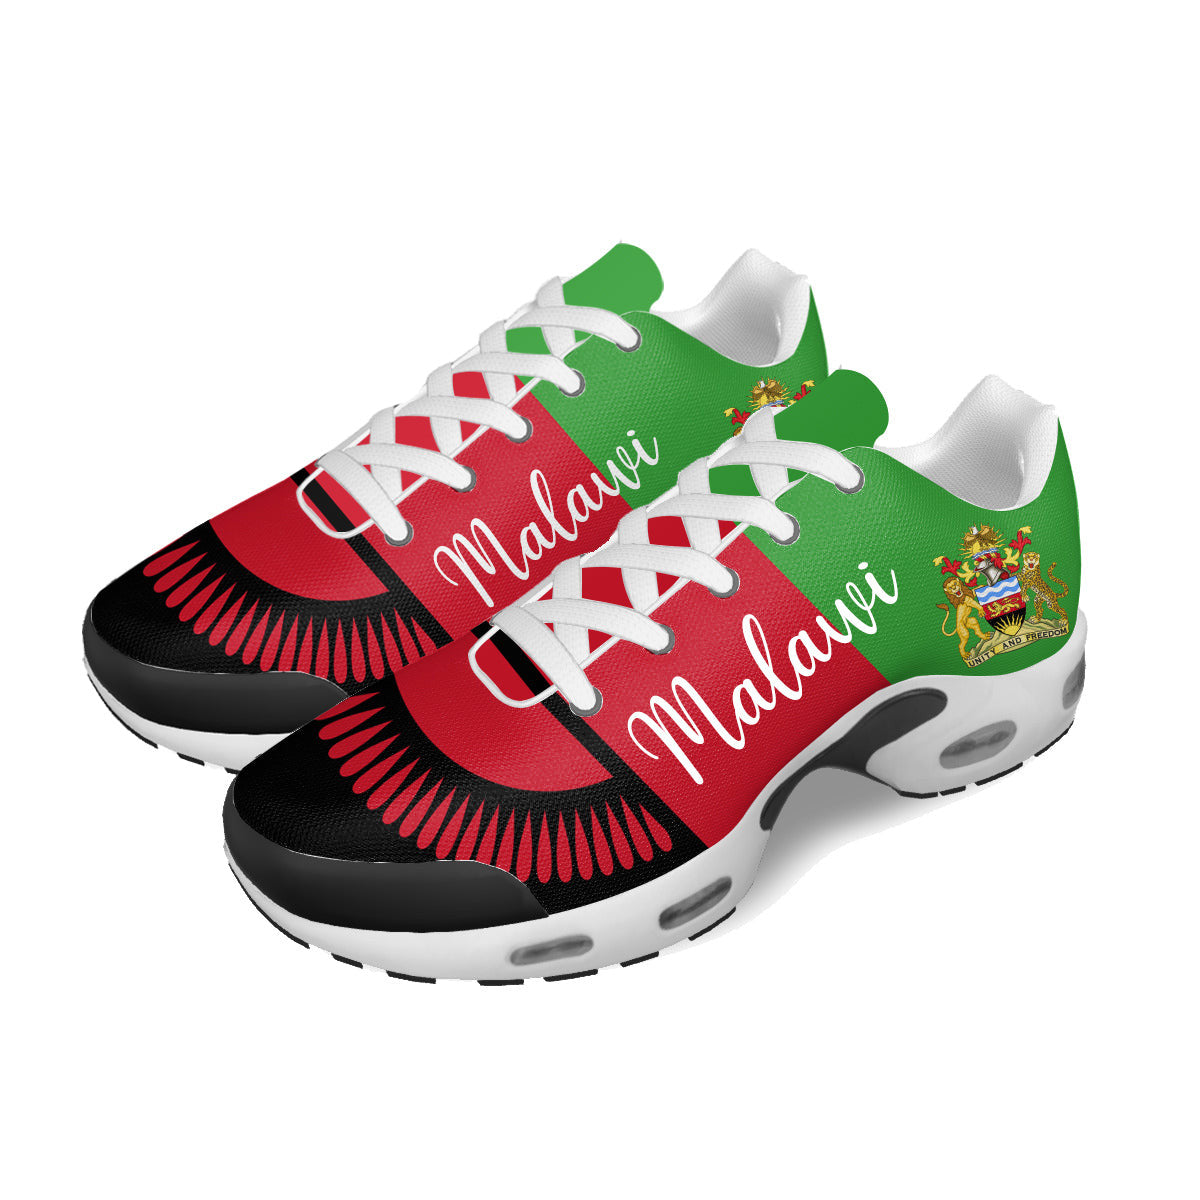 shoes-malawi-cushion-sports-shoes